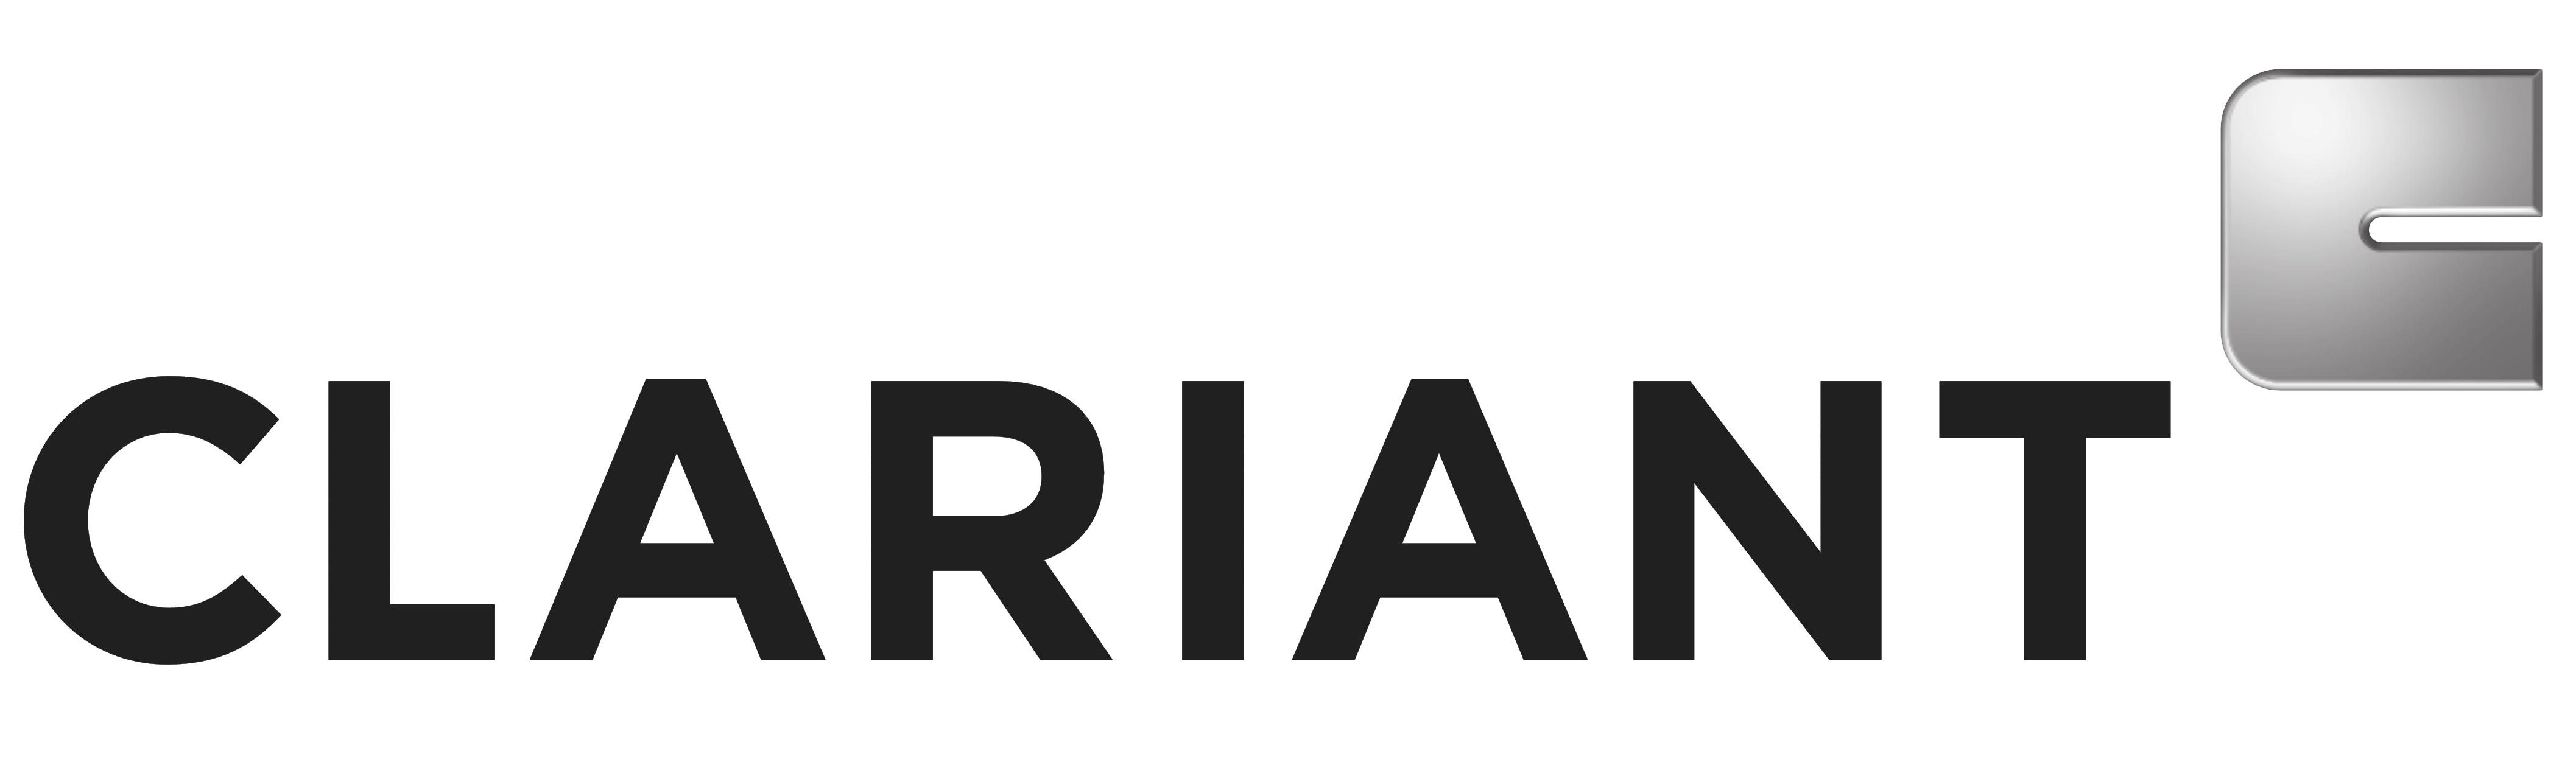 Clariant Logo - Clariant – Logos Download